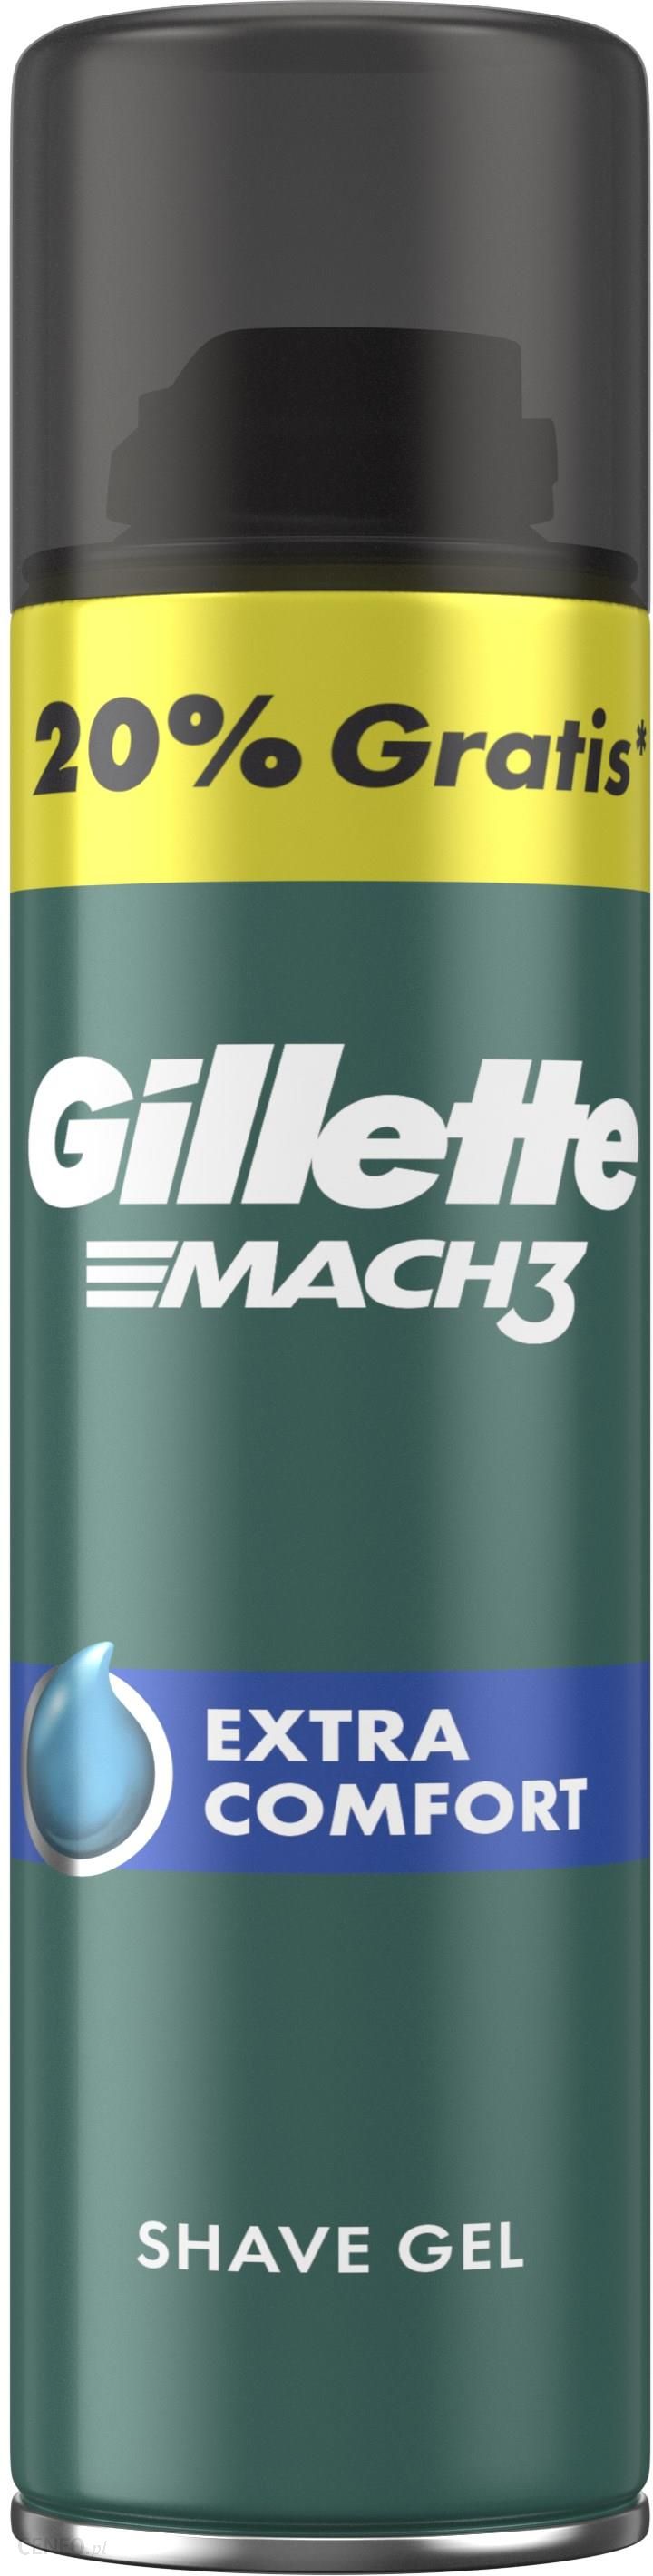 Gillette Mach3 Extra Comfort Żel Do golenia 240ml